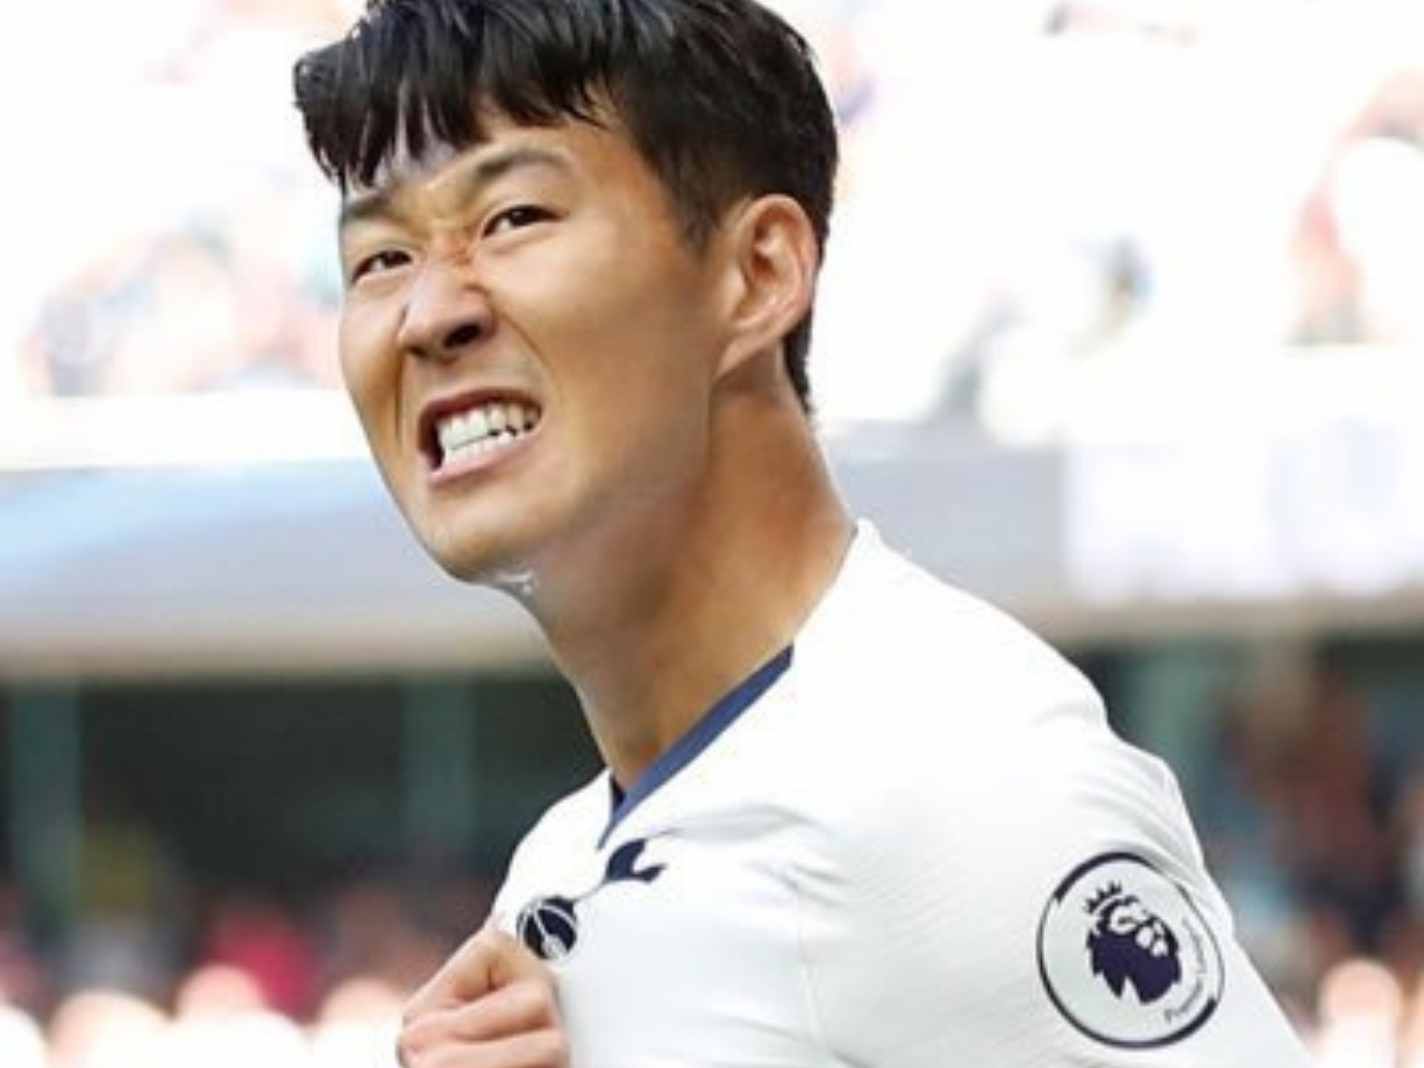 2 instances against Newcastle that show Son Heung-min’s sense of team spirit